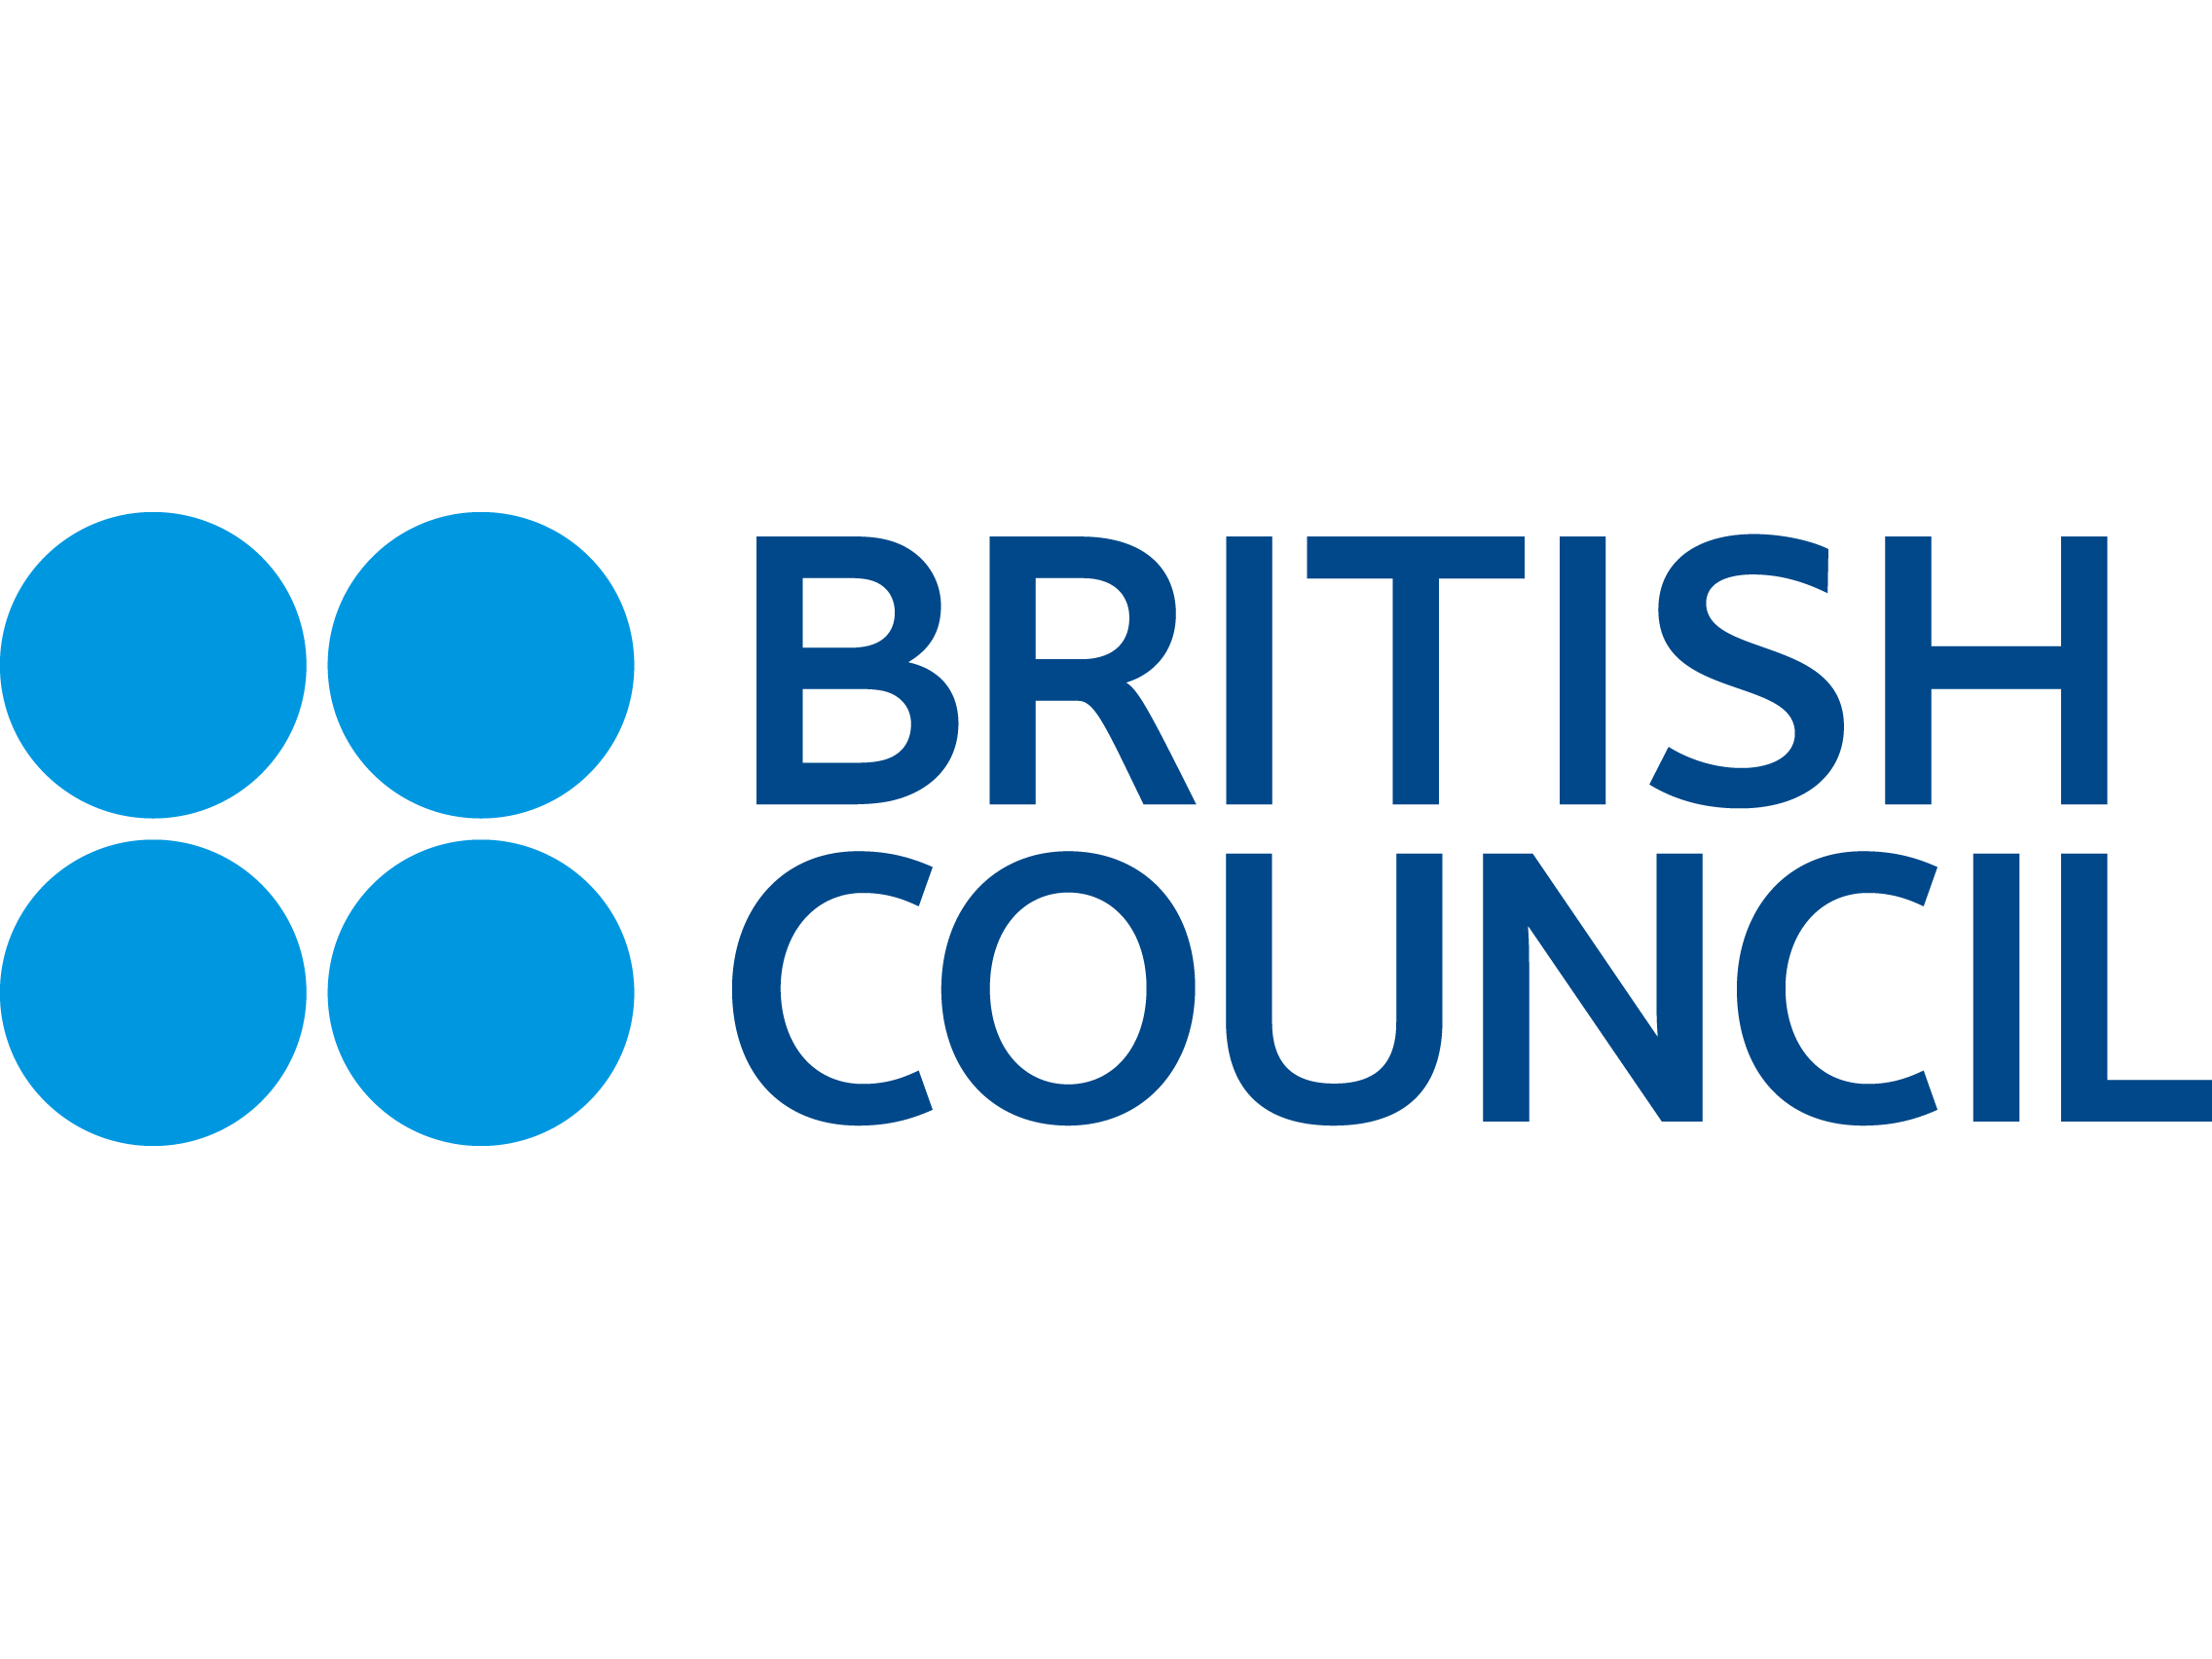 British-Council-logo-and-wordmark